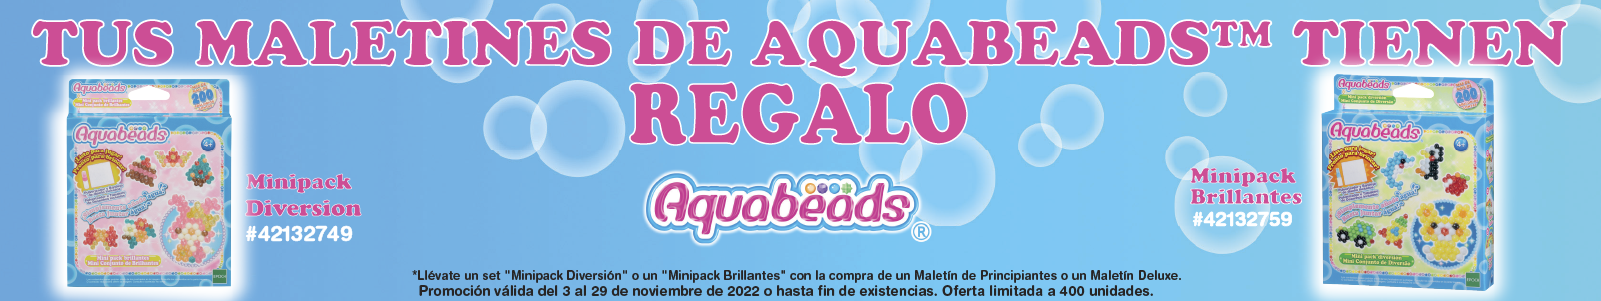 aquabeads